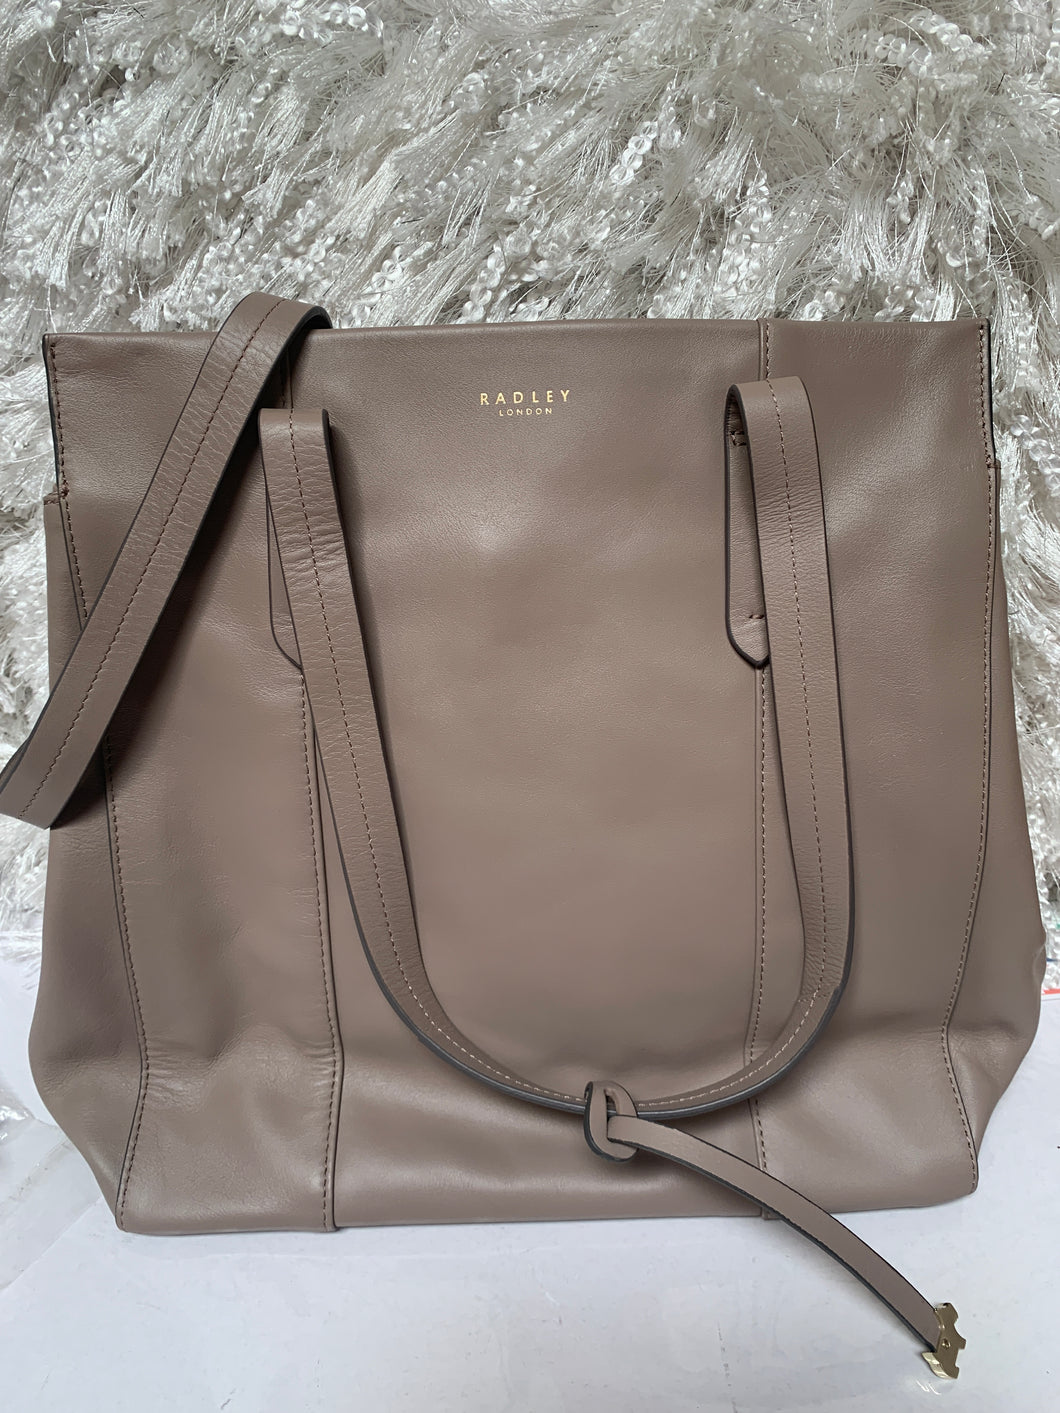 RADLEY London Leather Tote Bag, Mink - Midtown Bargains